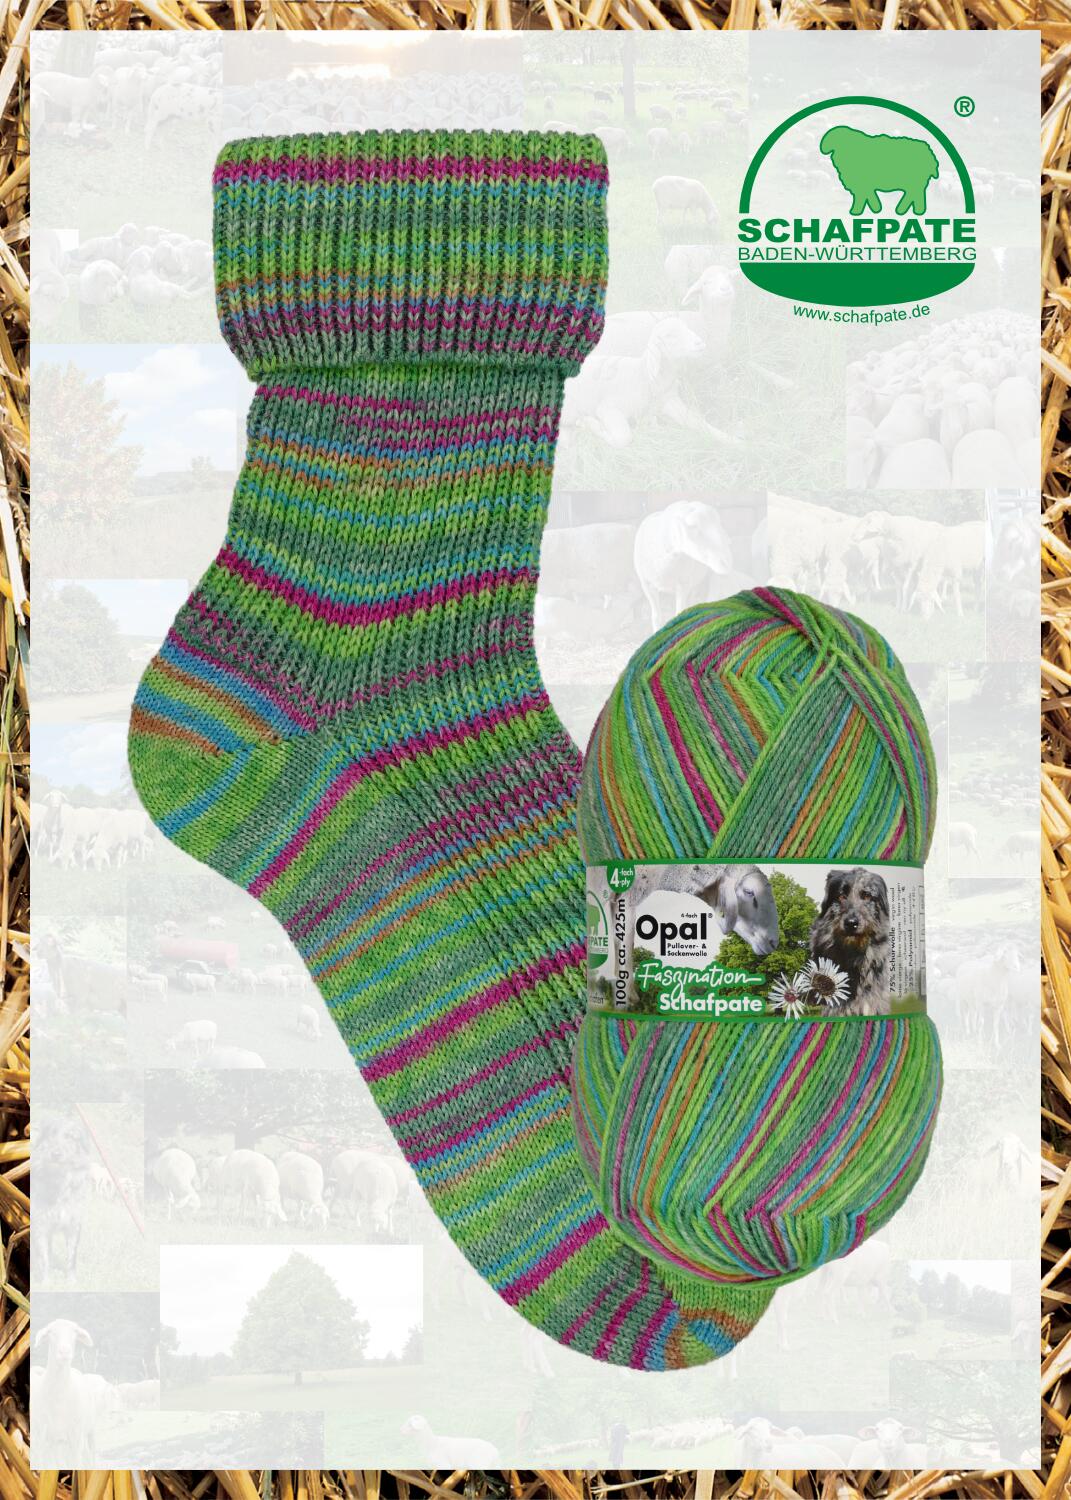 Opal Sockenwolle  "Schafpate " 4-fach Sockengarn Farbe: Landschaftspflege